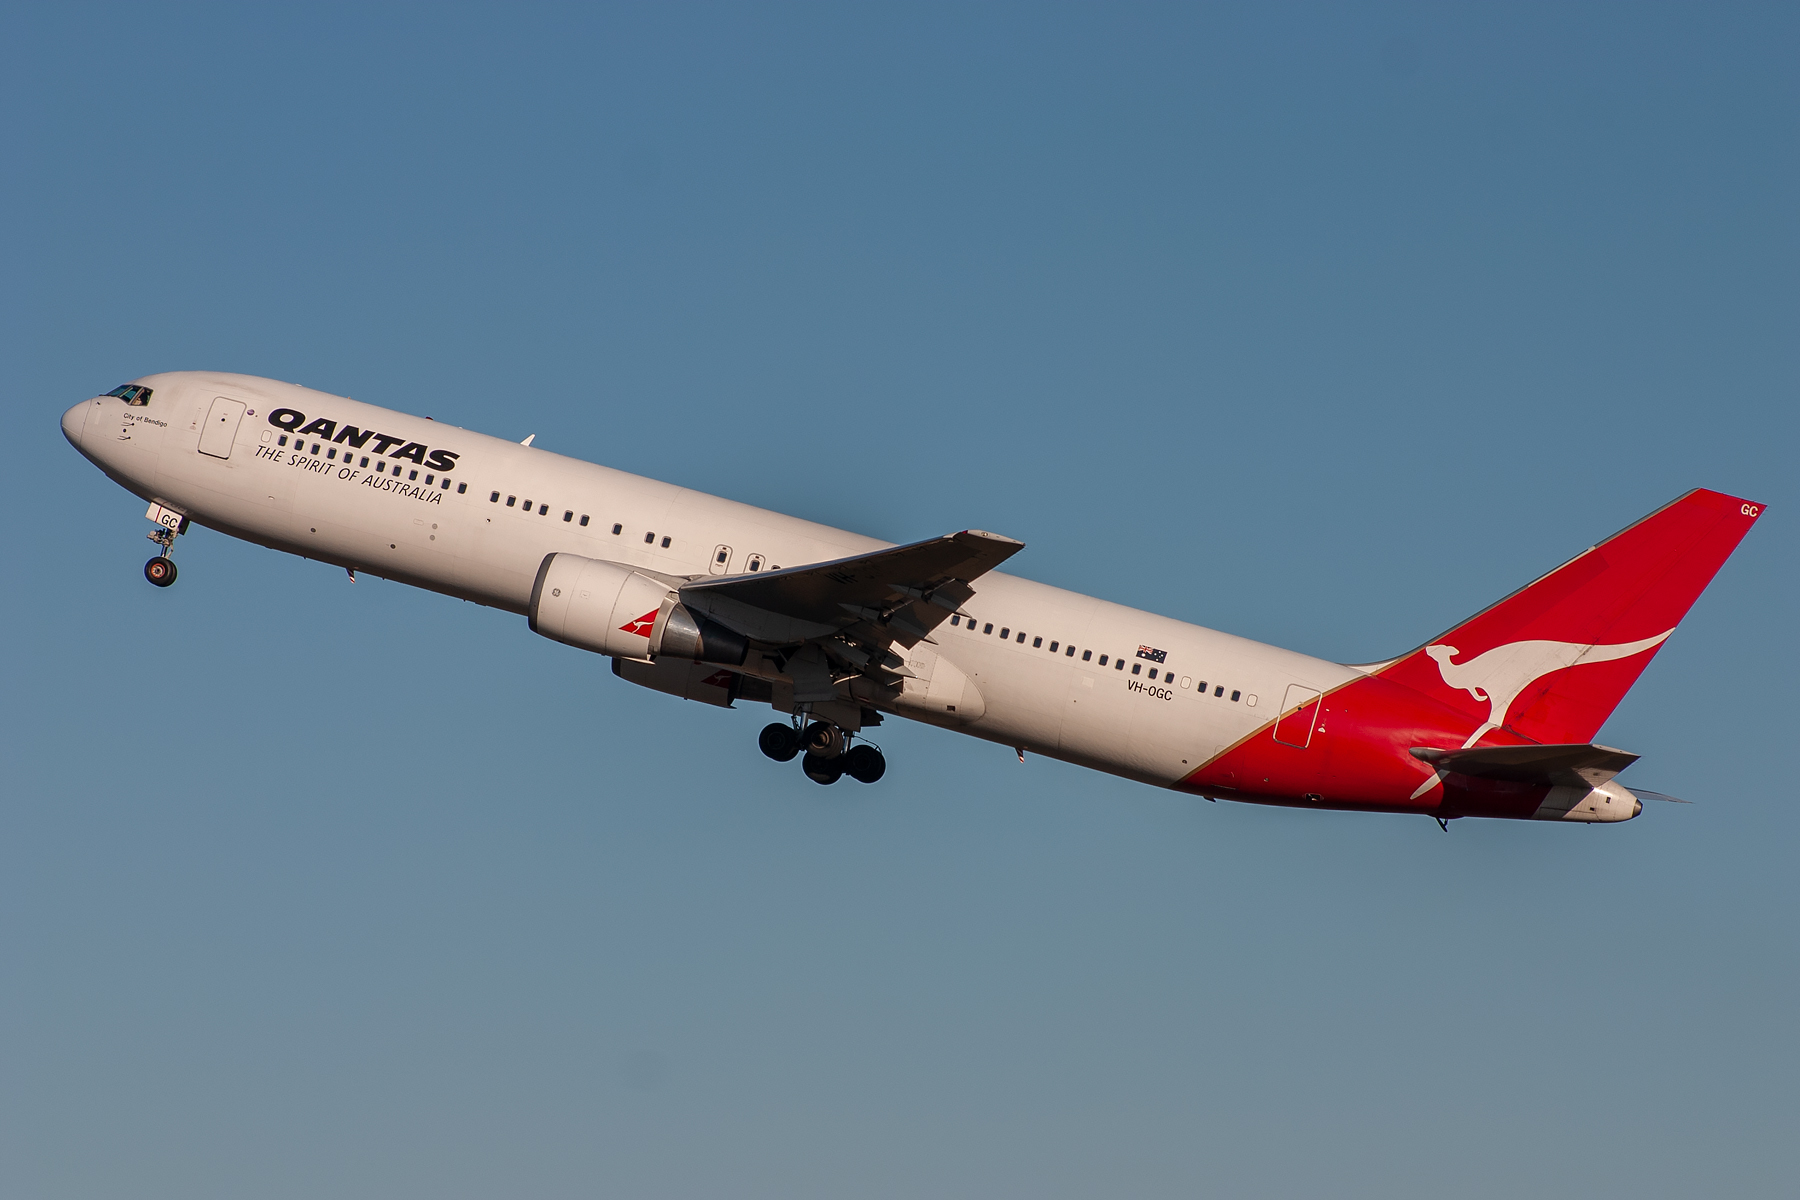 Qantas Boeing 767-300ER VH-OGC at Kingsford Smith